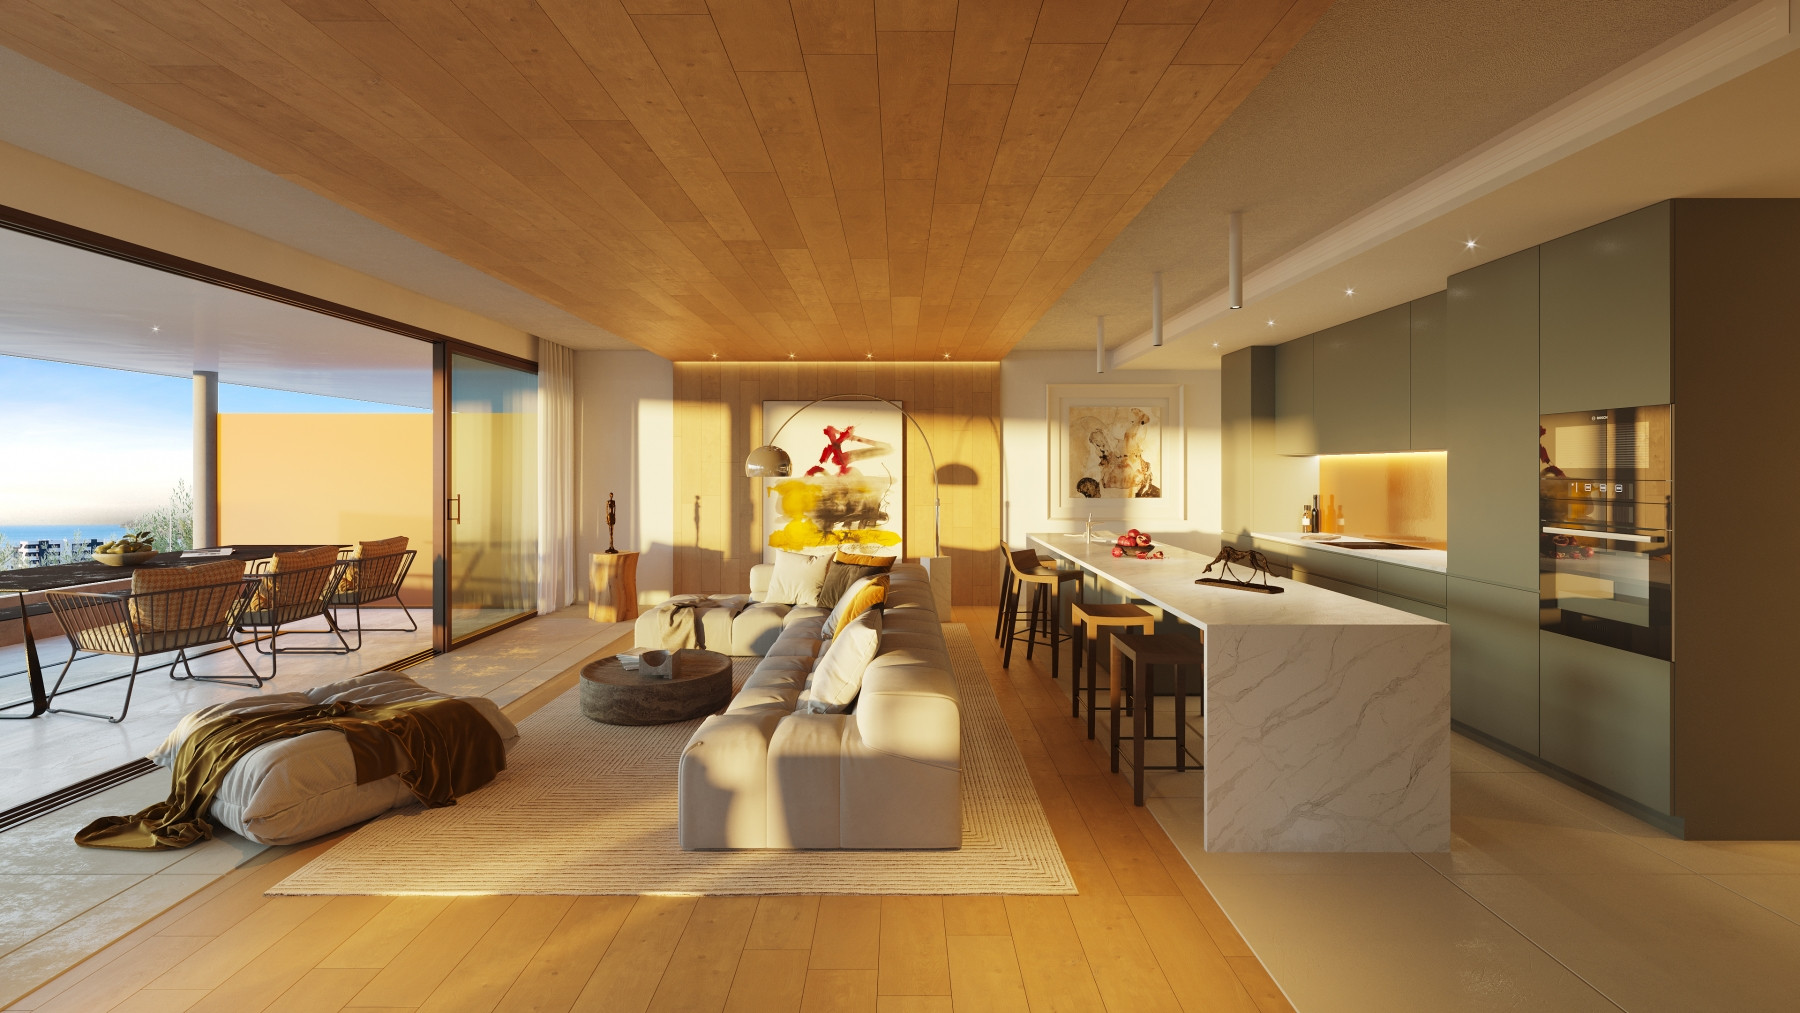 Luxury three bedroom villa with solarium and swimming pool situated in El Higueron, Fuengirola. | Image 2